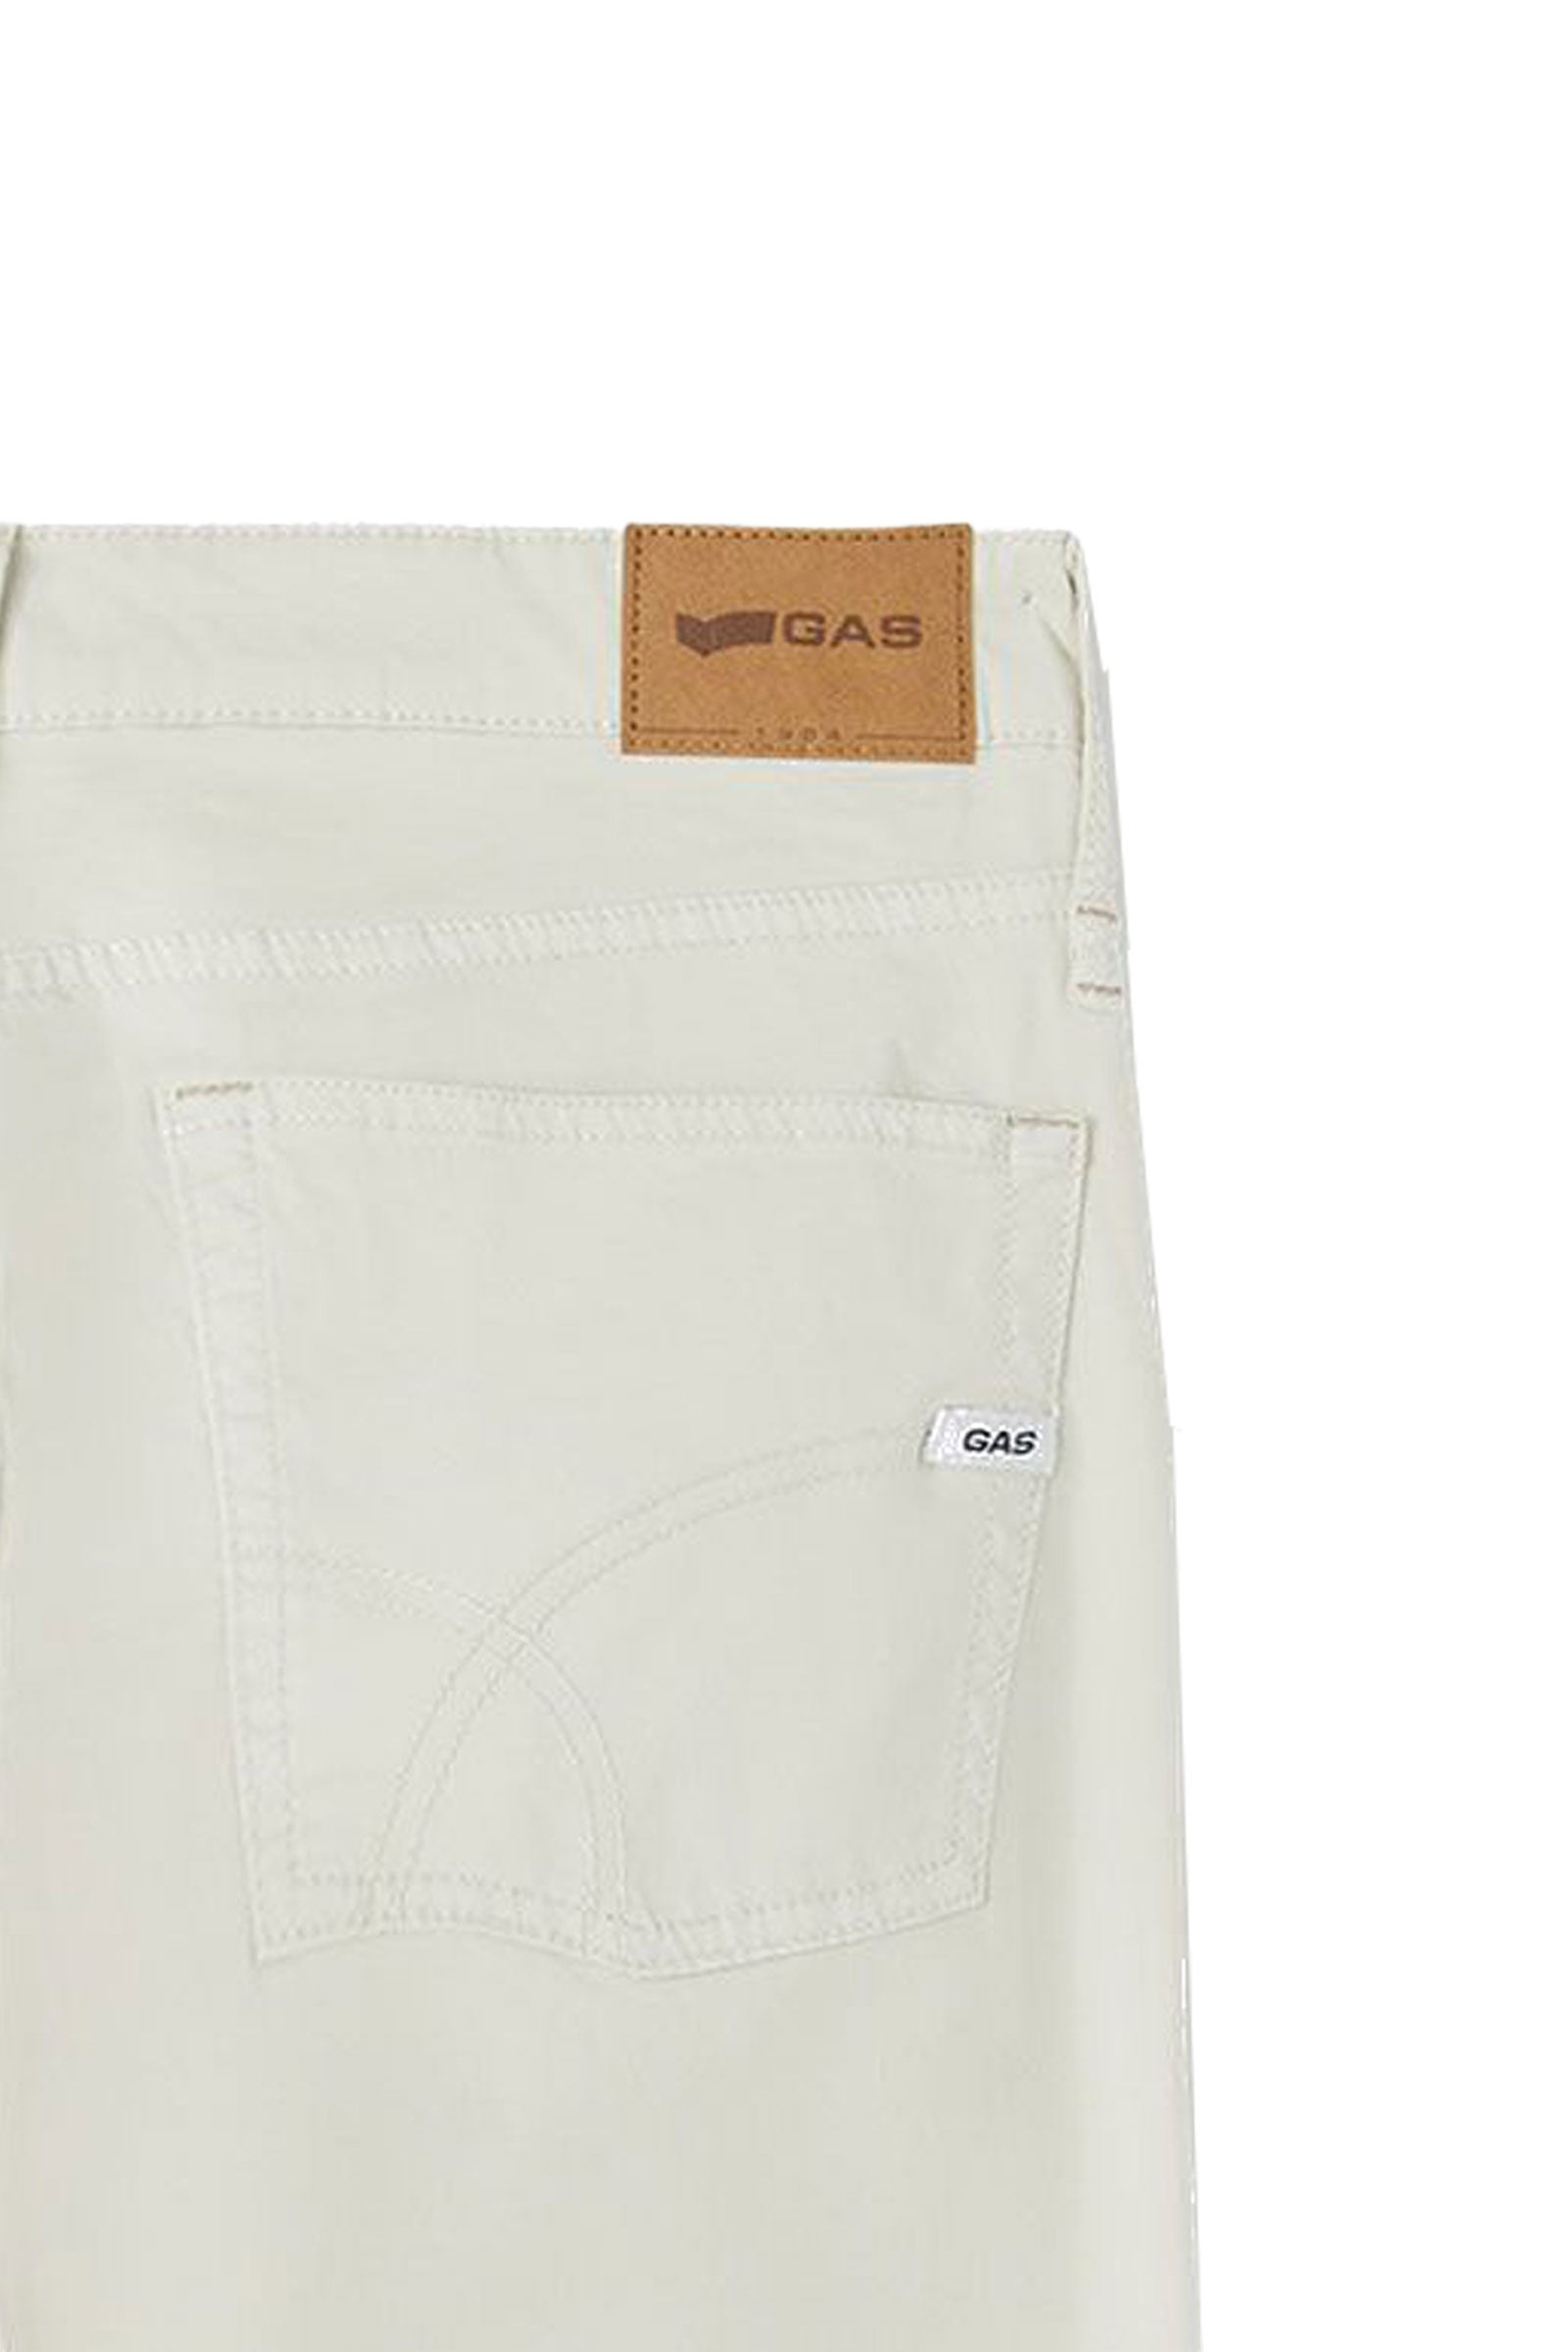 Albert Simple Rev 5 Pocket in Silver Birch Jeans GAS   